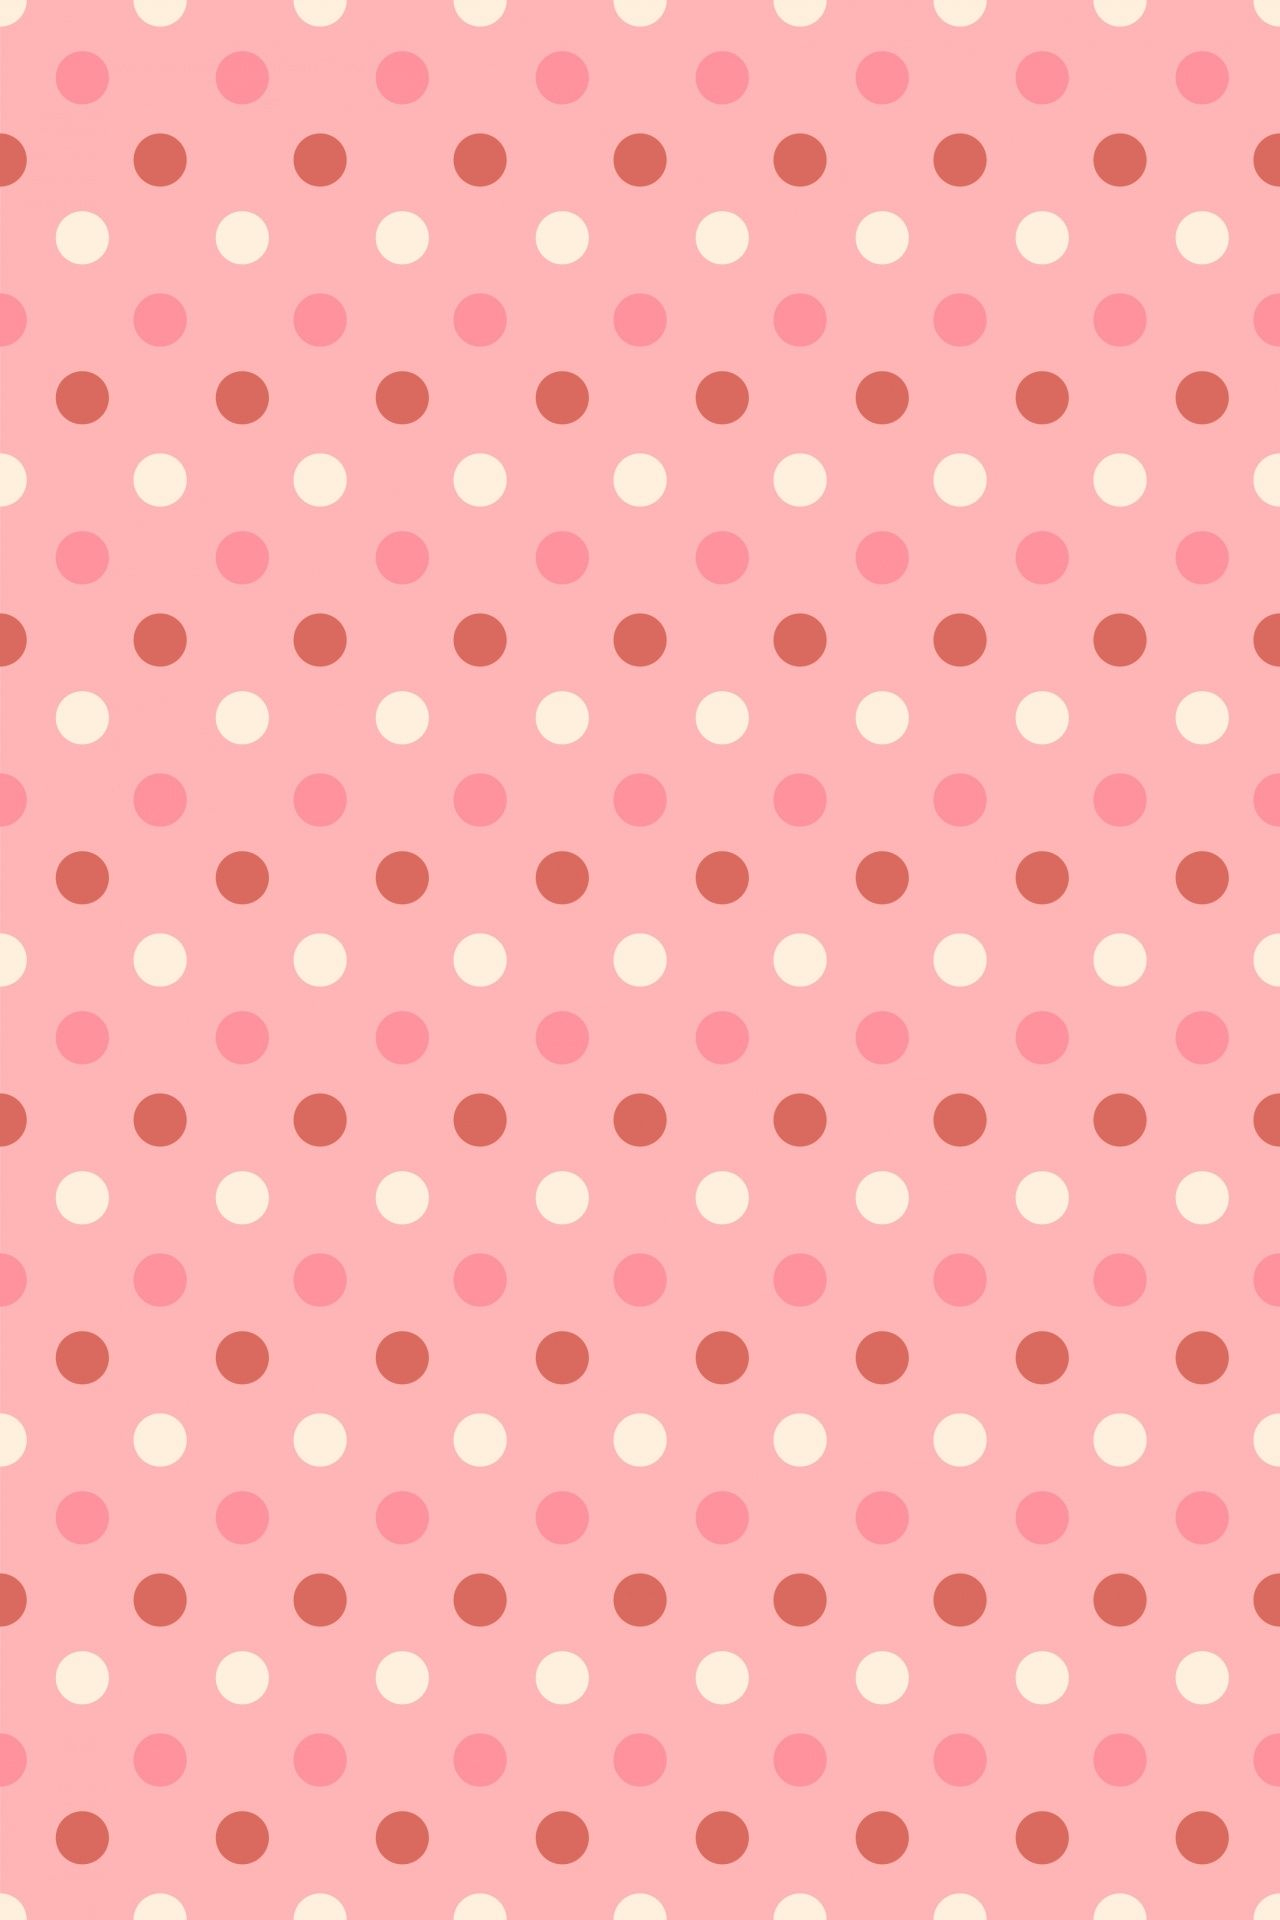 1280x1920 Polka Dots Background Pink | Polka dot background, Polka dots, Pink